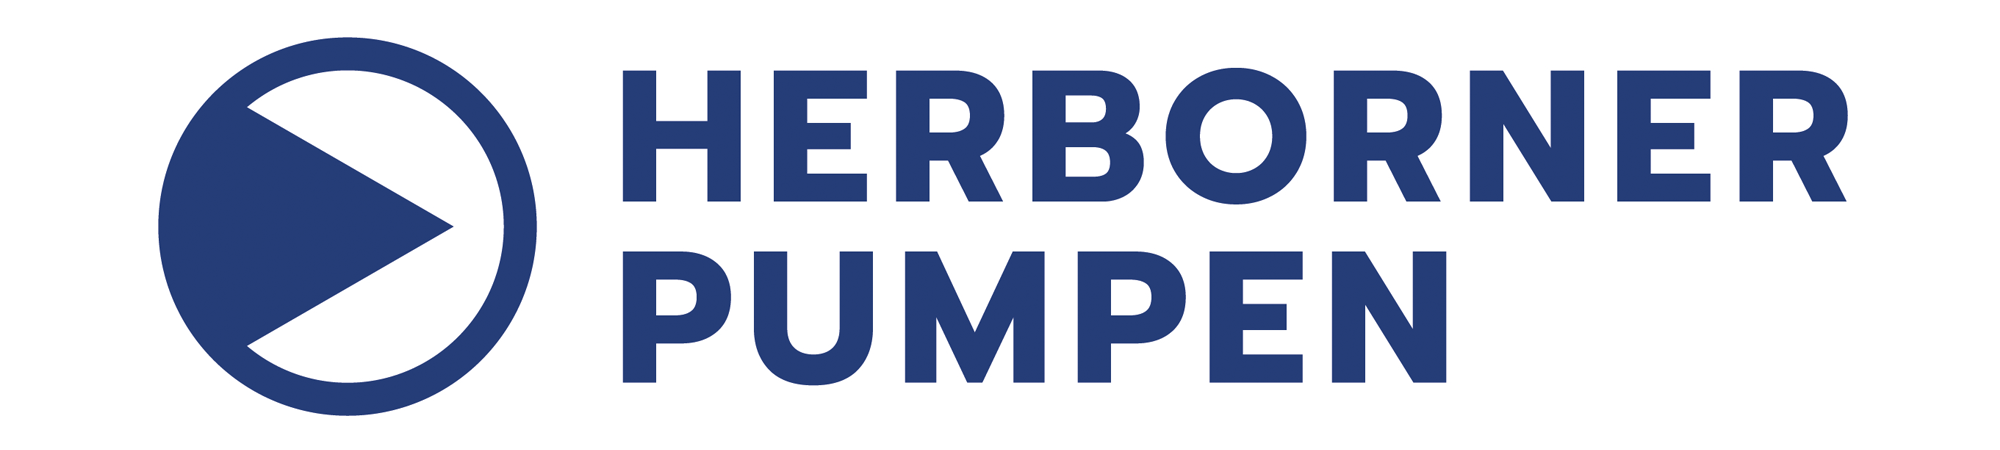 Herborner_Pumpen_logo